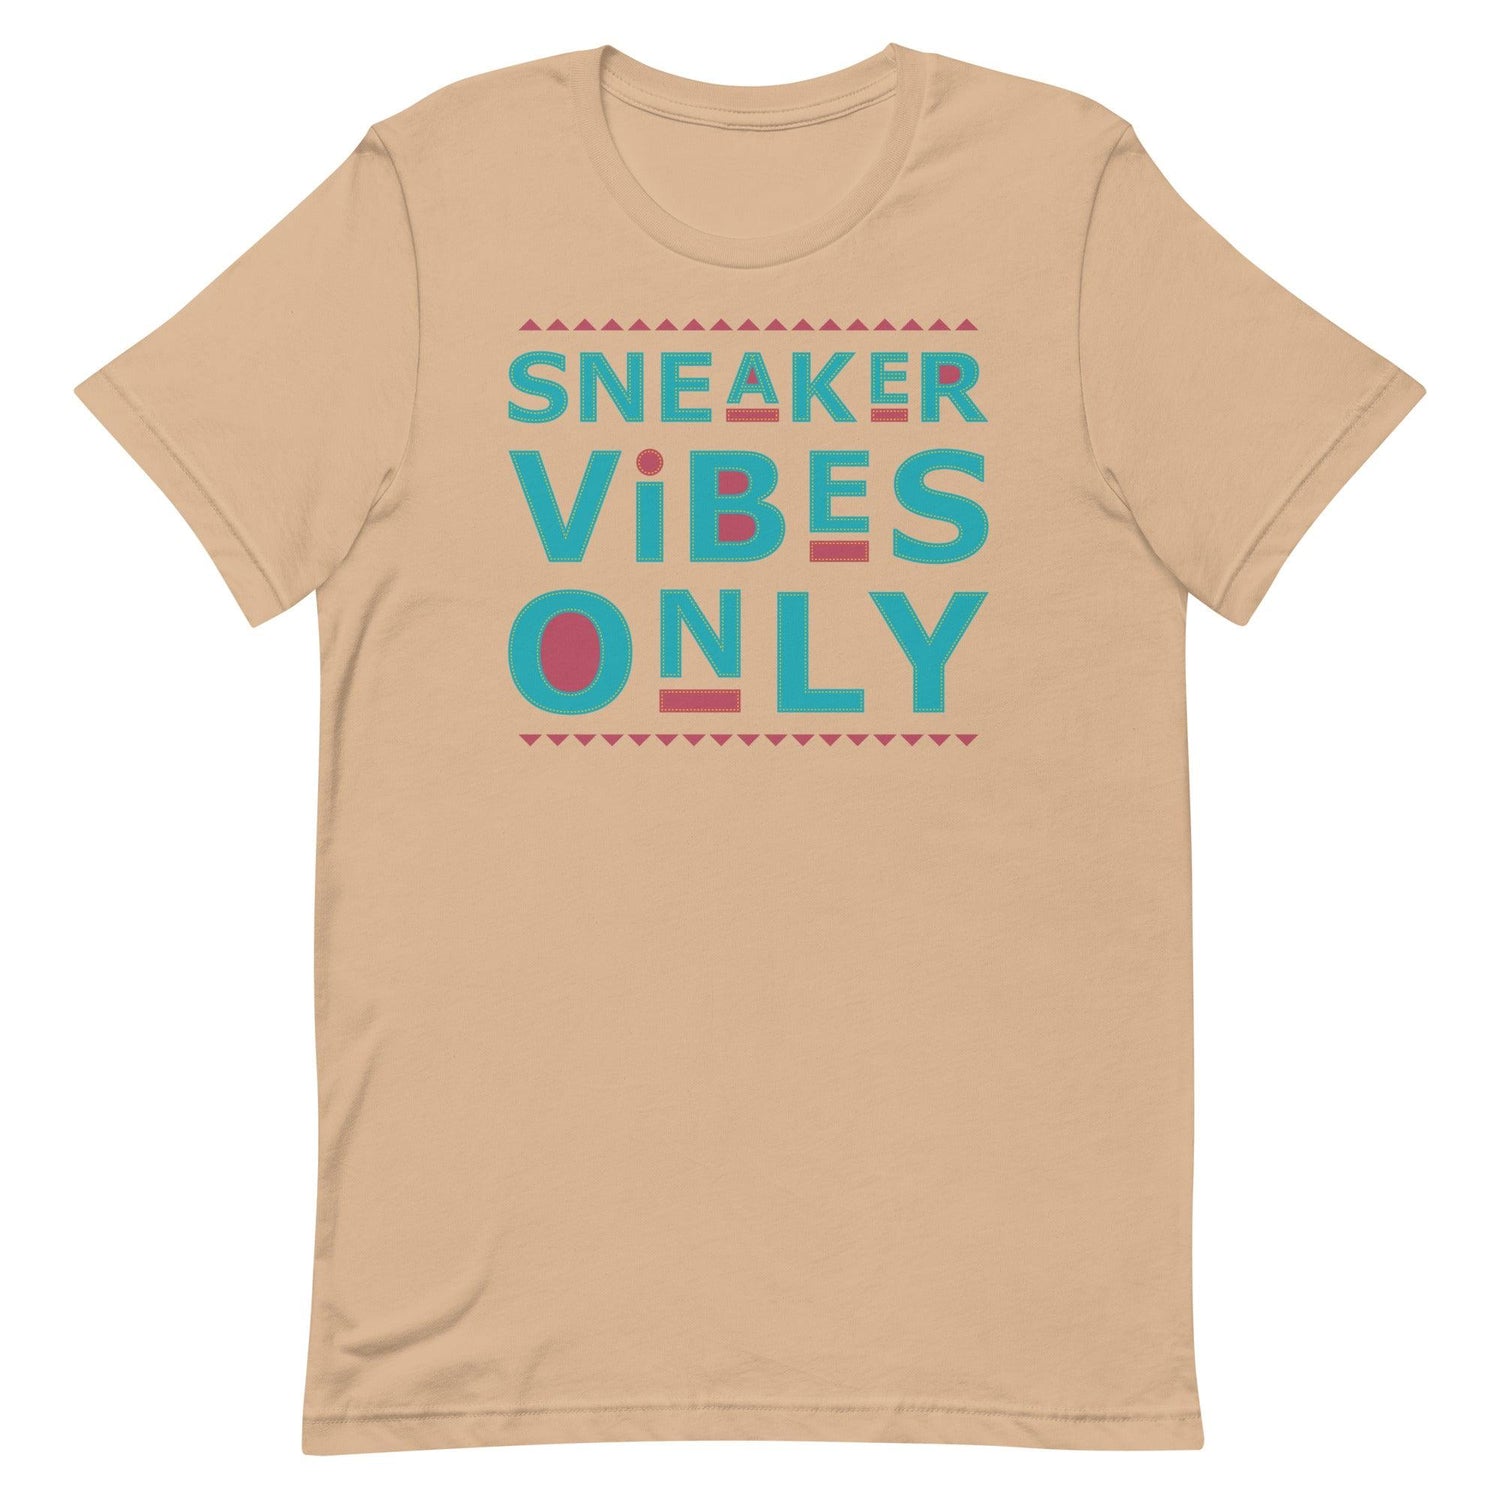 Sneaker Vibes Only Shirt To Match Union LA Nike Cortez Sesame - SNKADX